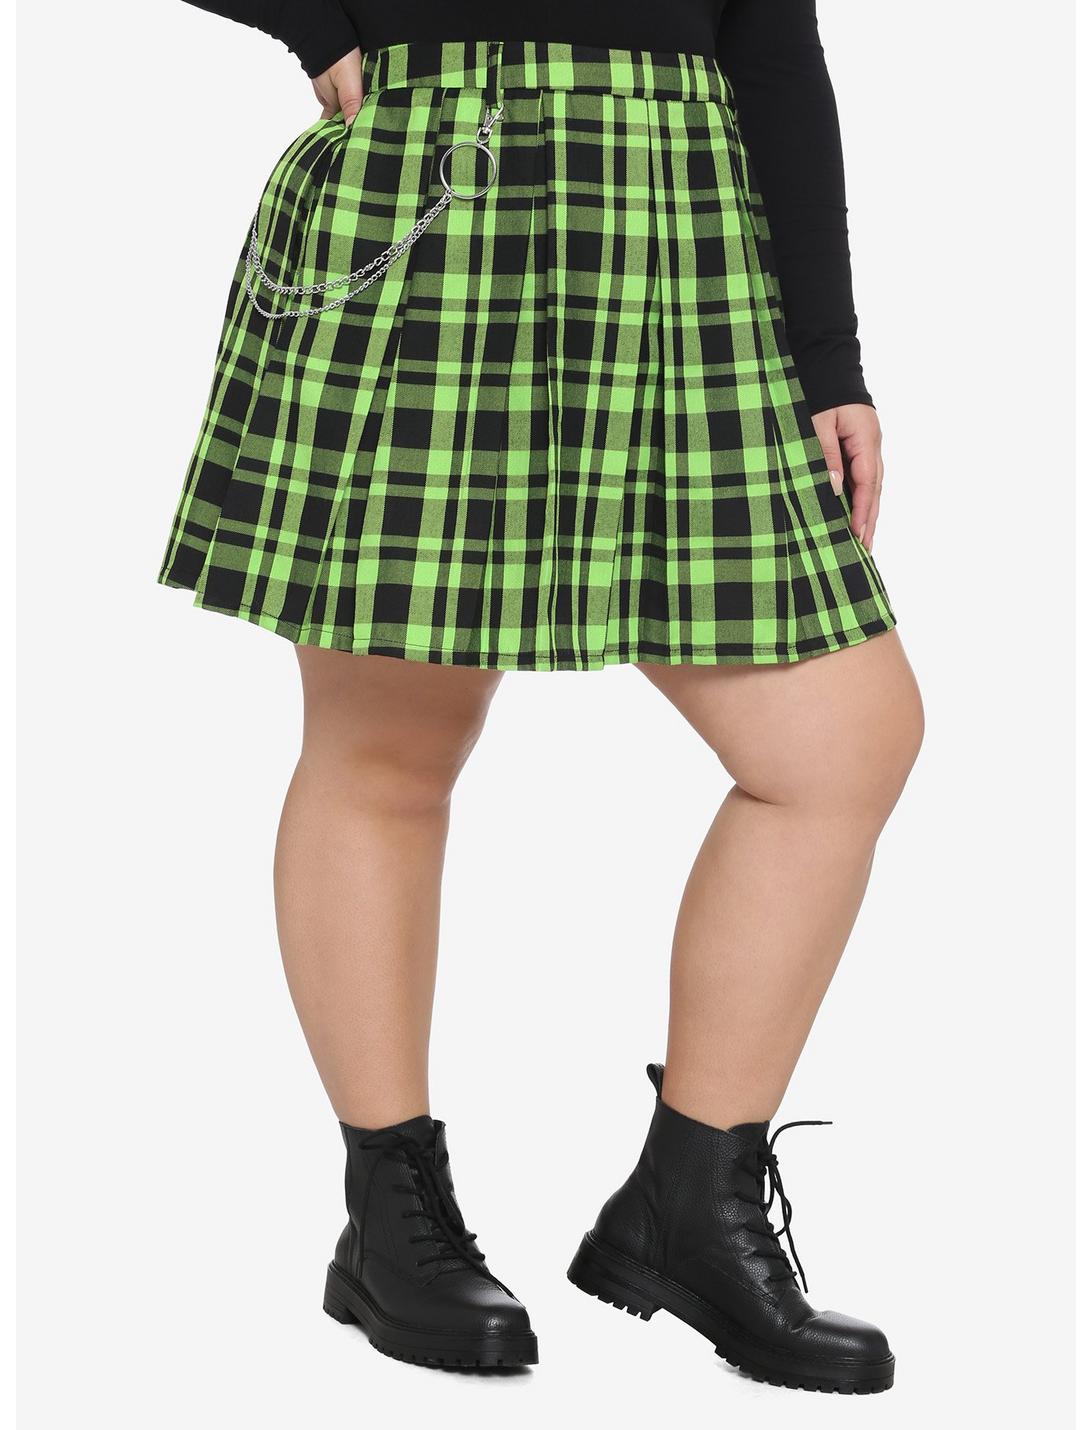 Green & Black Plaid Pleated Chain Skirt Plus Size, PLAID, hi-res